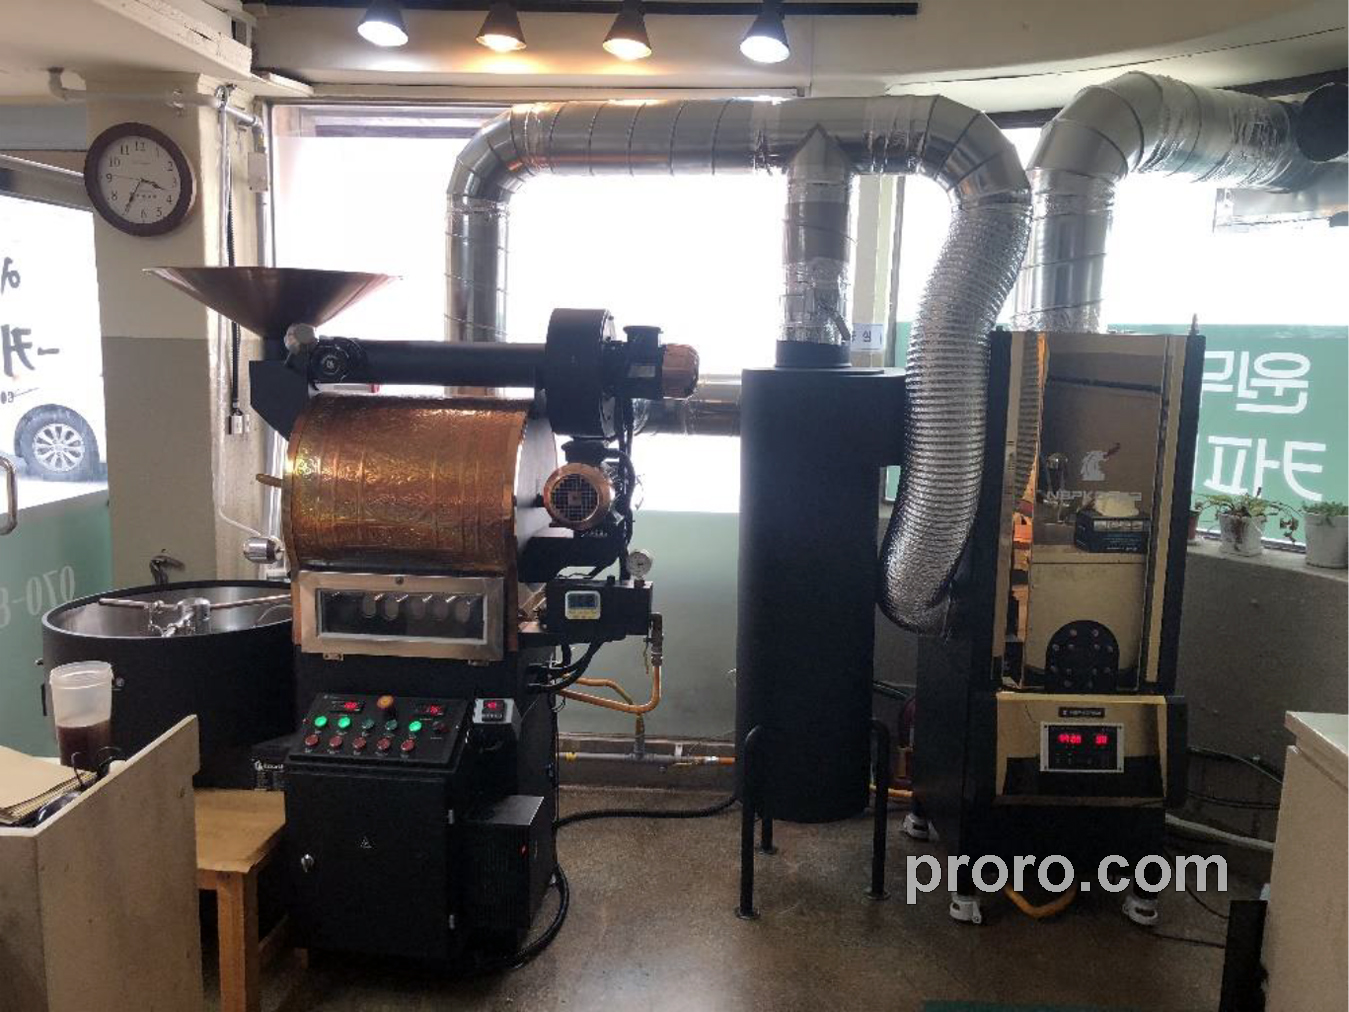 OZTURKBAY 咖啡烘焙机 无烟无味 后燃机 安装案例 - 咖啡内音咖啡工作室